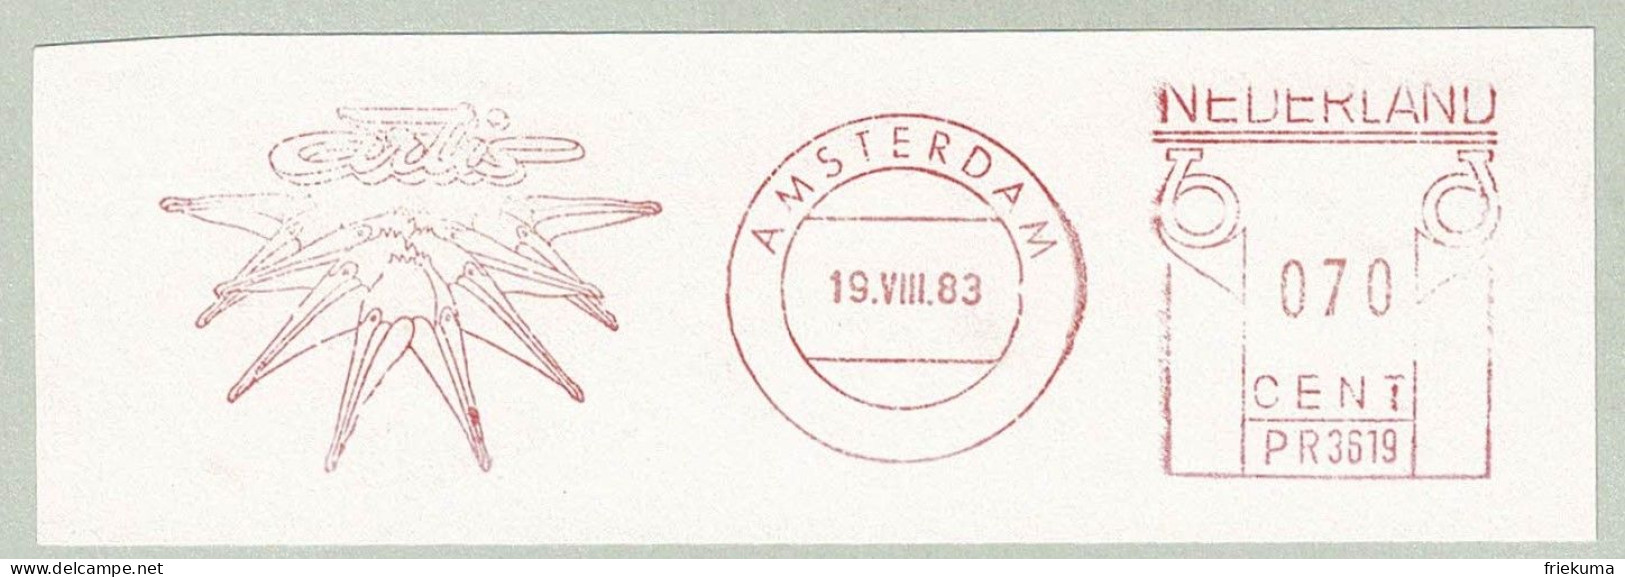 Niederlande / Nederland 1983, Freistempel / EMA / Meterstamp Amsterdam, Pelikane / Pelicans / Pelecanus - Pelícanos